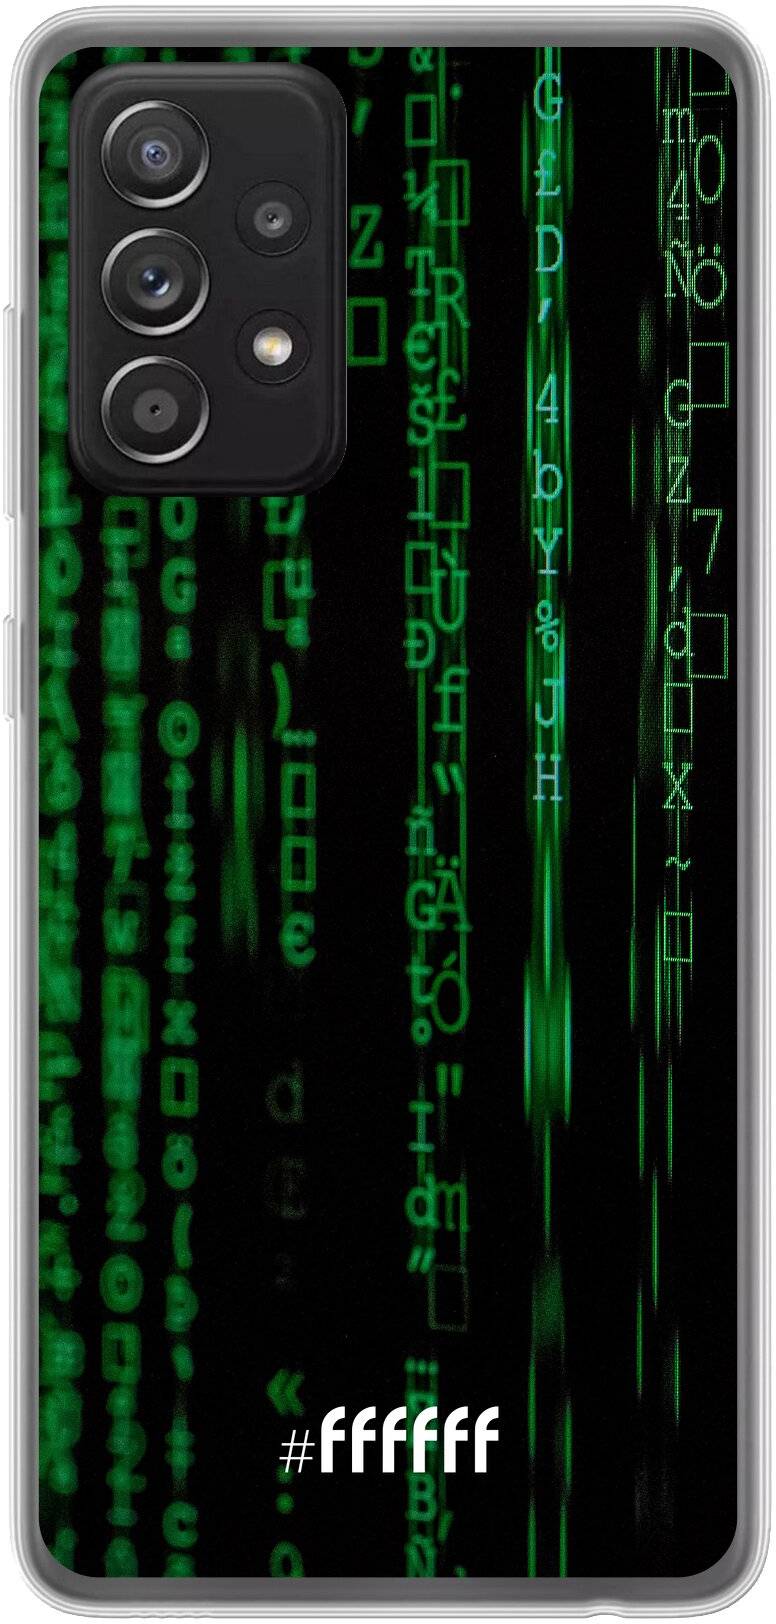 Hacking The Matrix Galaxy A52